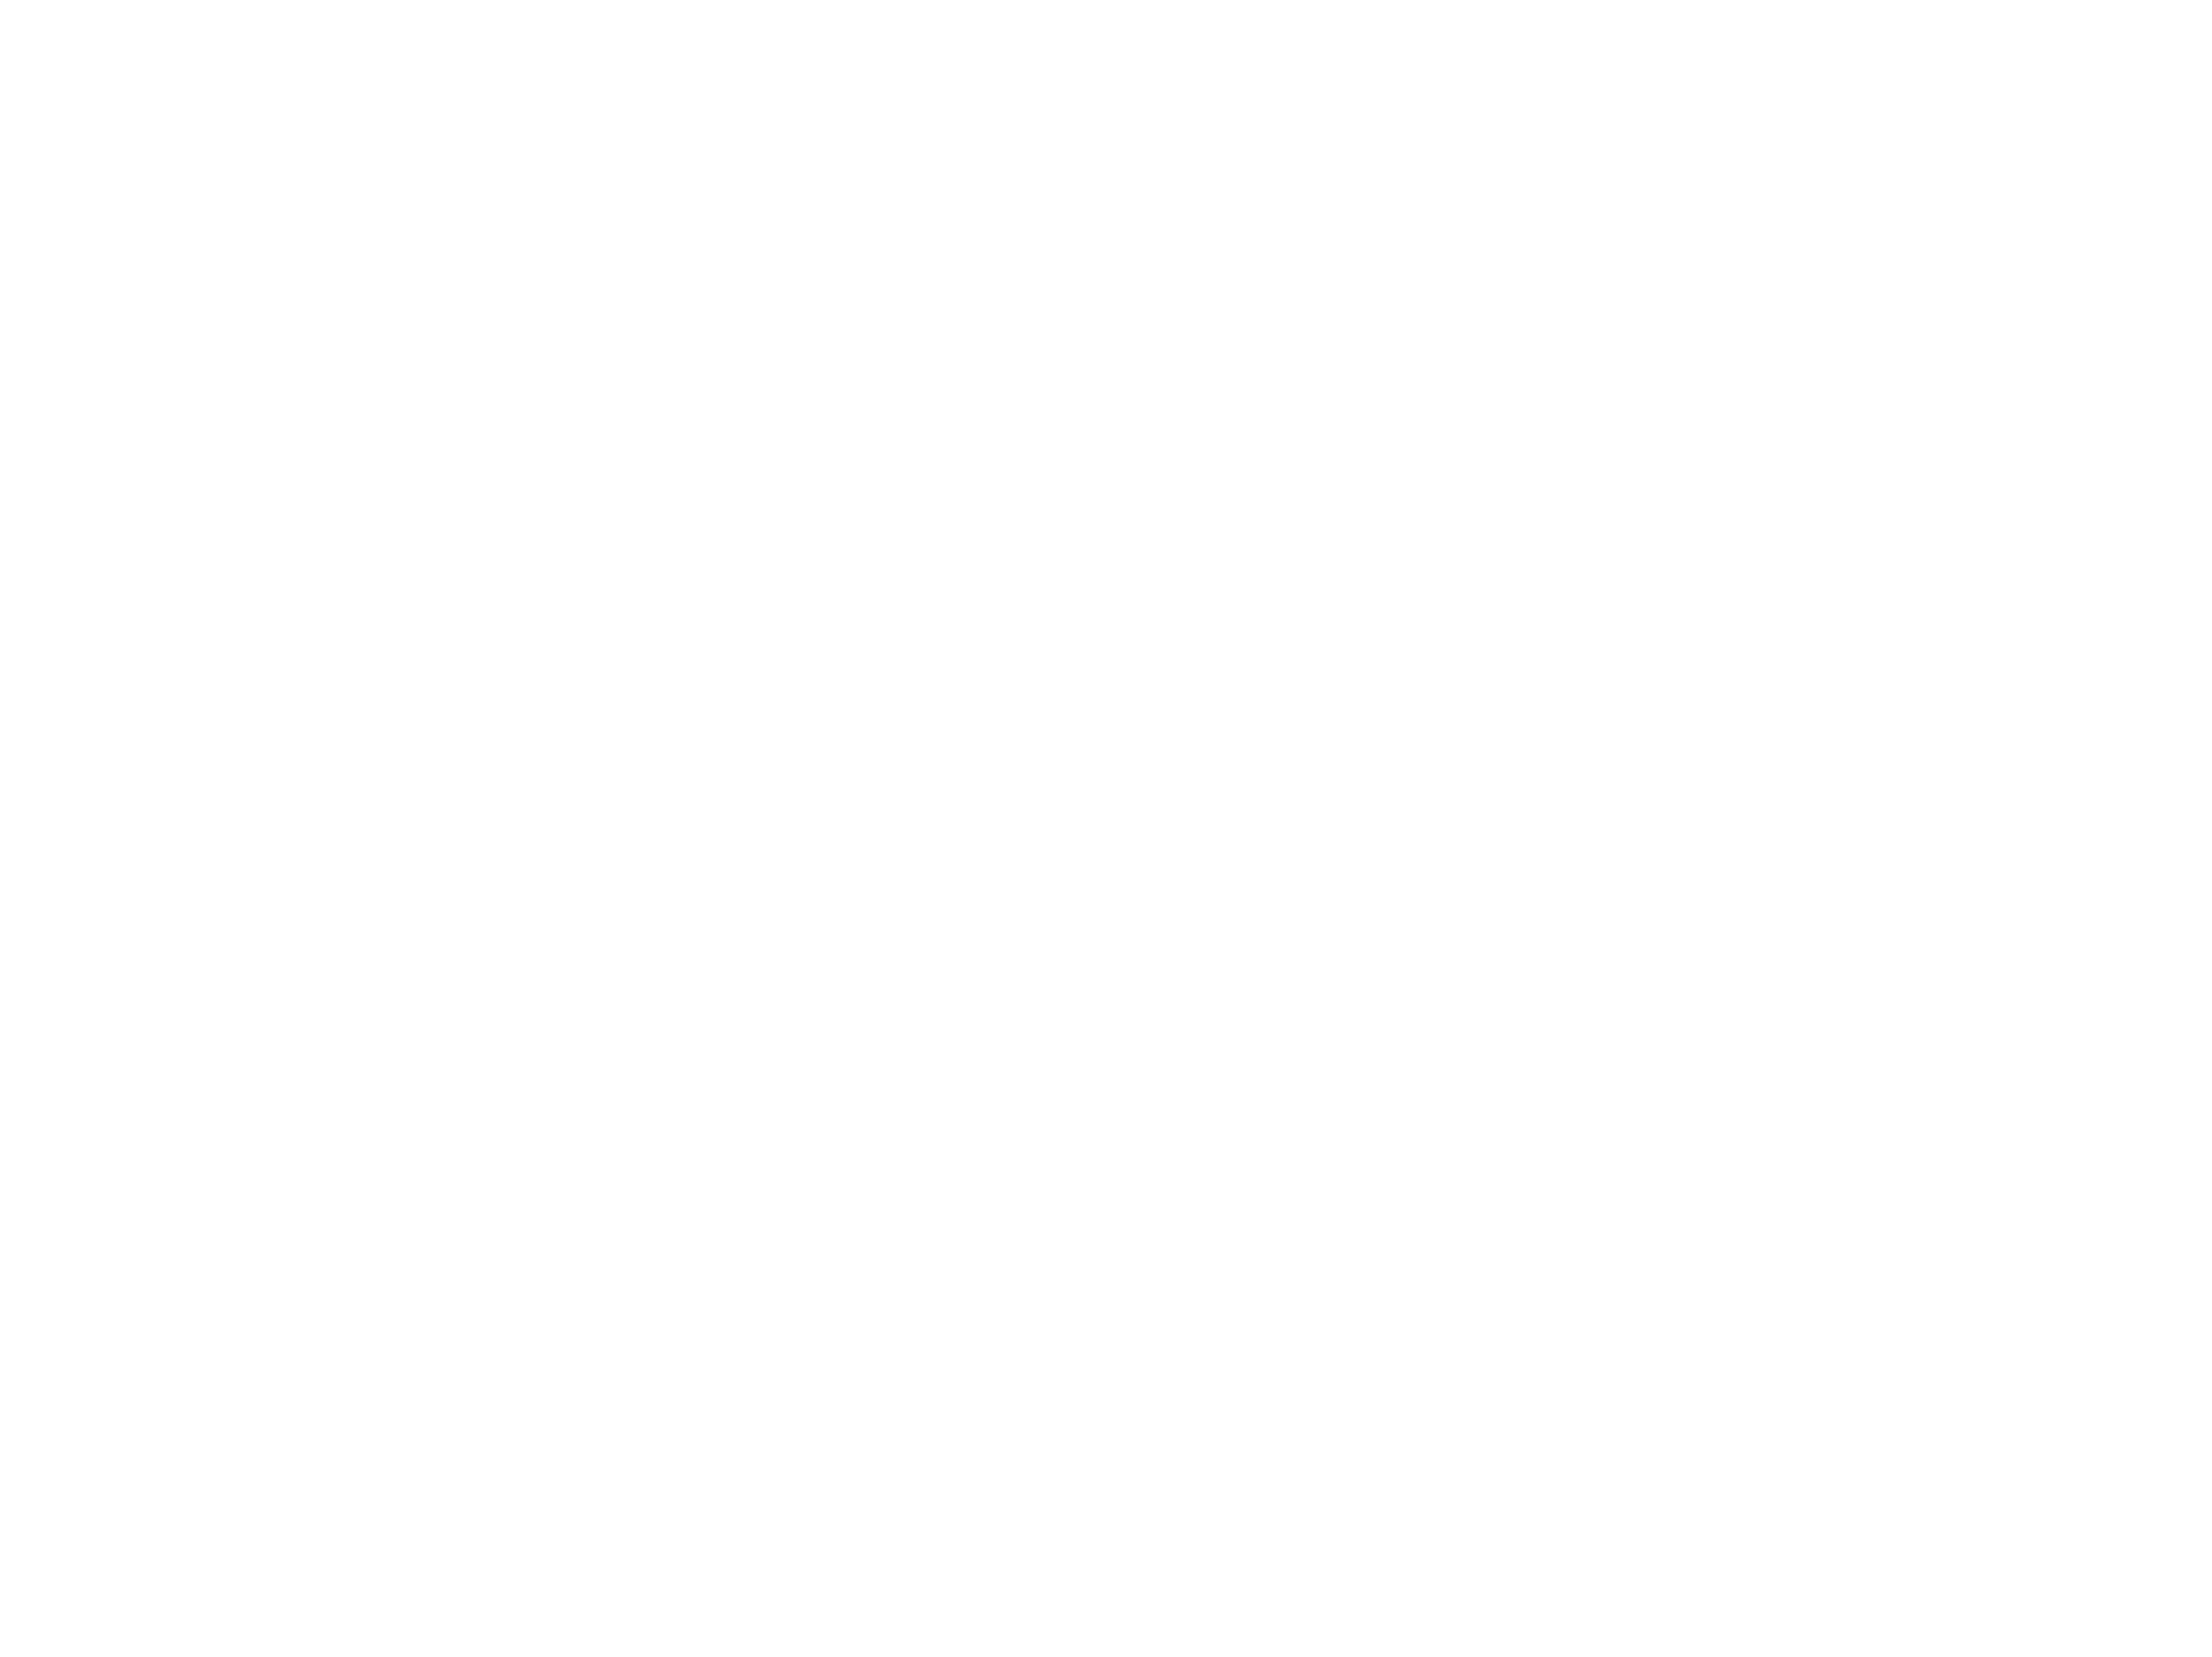 Laser M